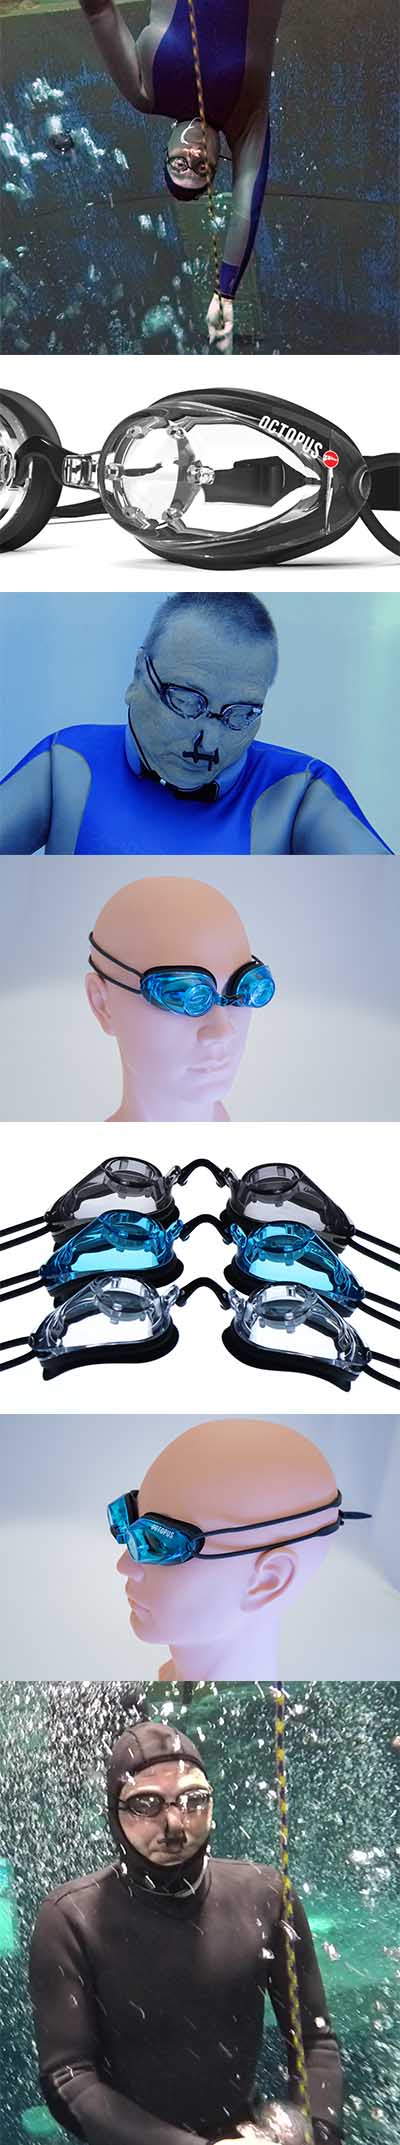 Goggles von Octopus Freediving